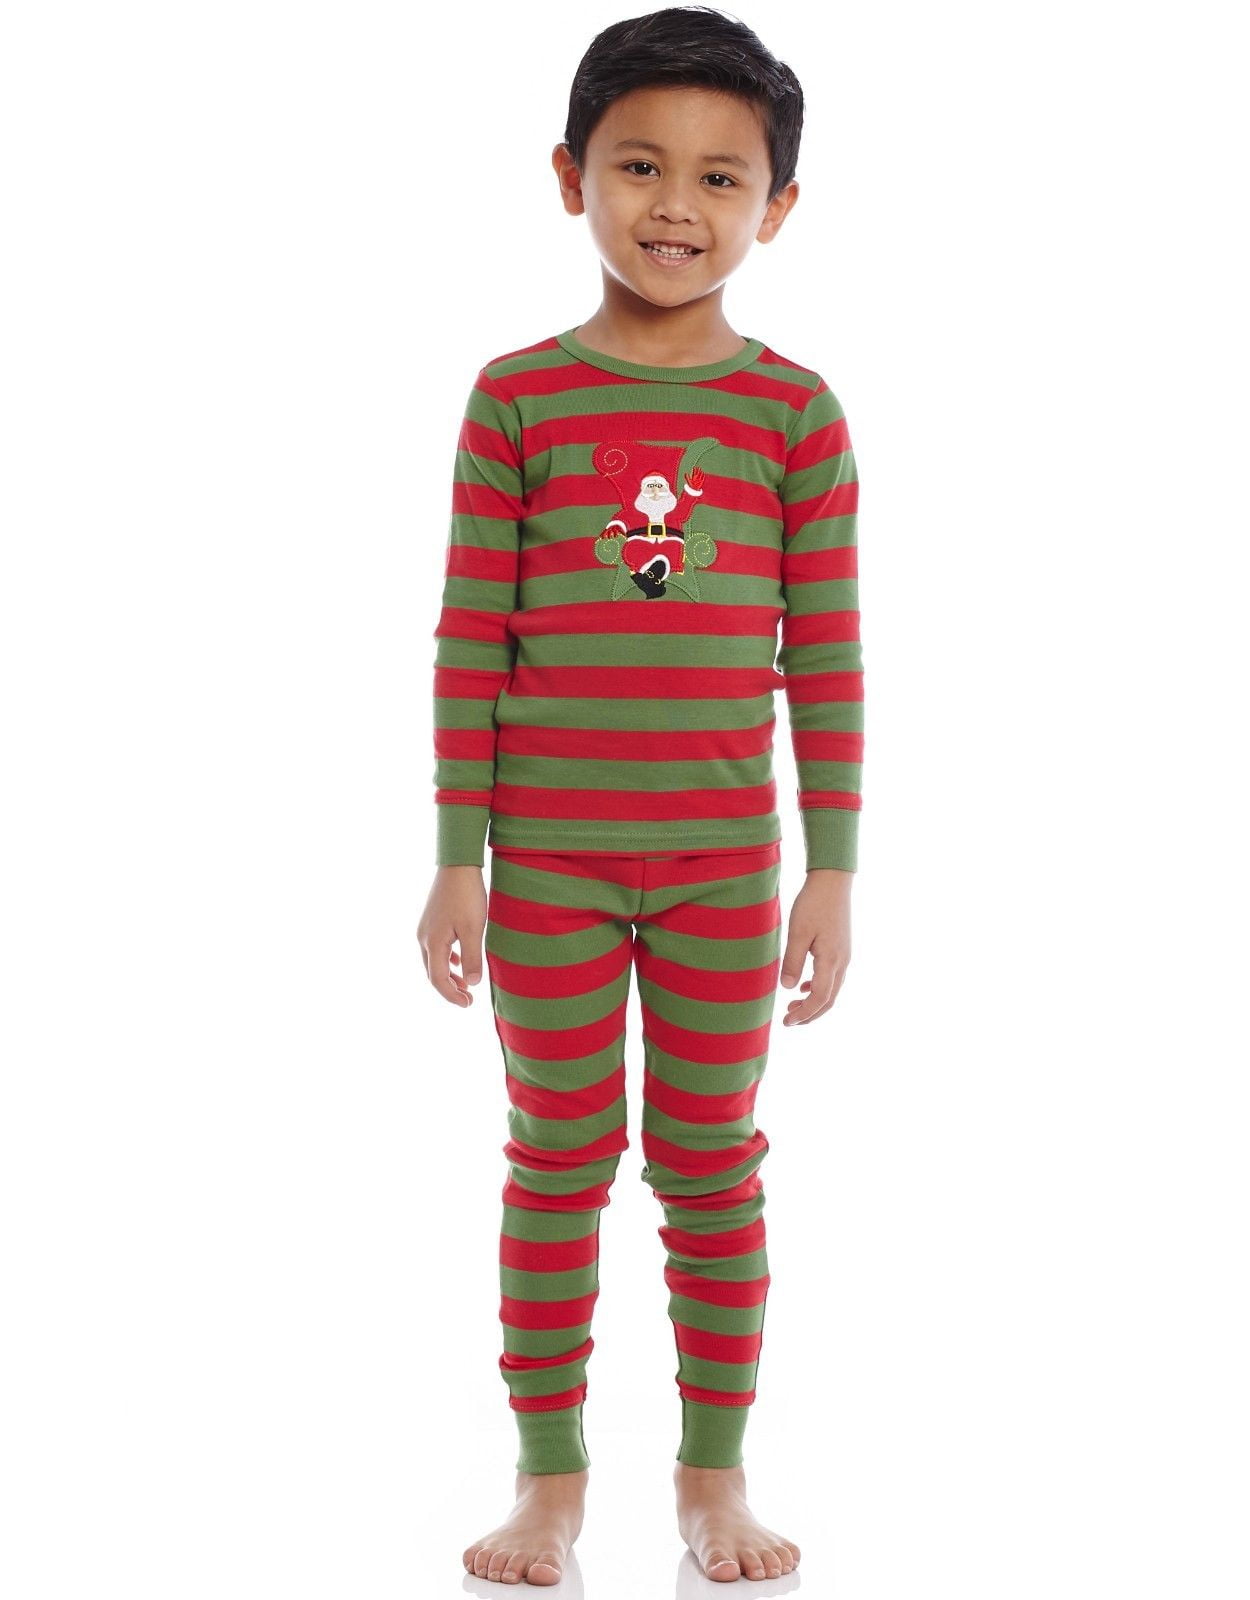 Little Boys Girls Christmas Pajamas Sets Deer Dinosaur Sleepwear 100% Cotton Pjs 2 Piece Toddler Clothes Kids 3-10T